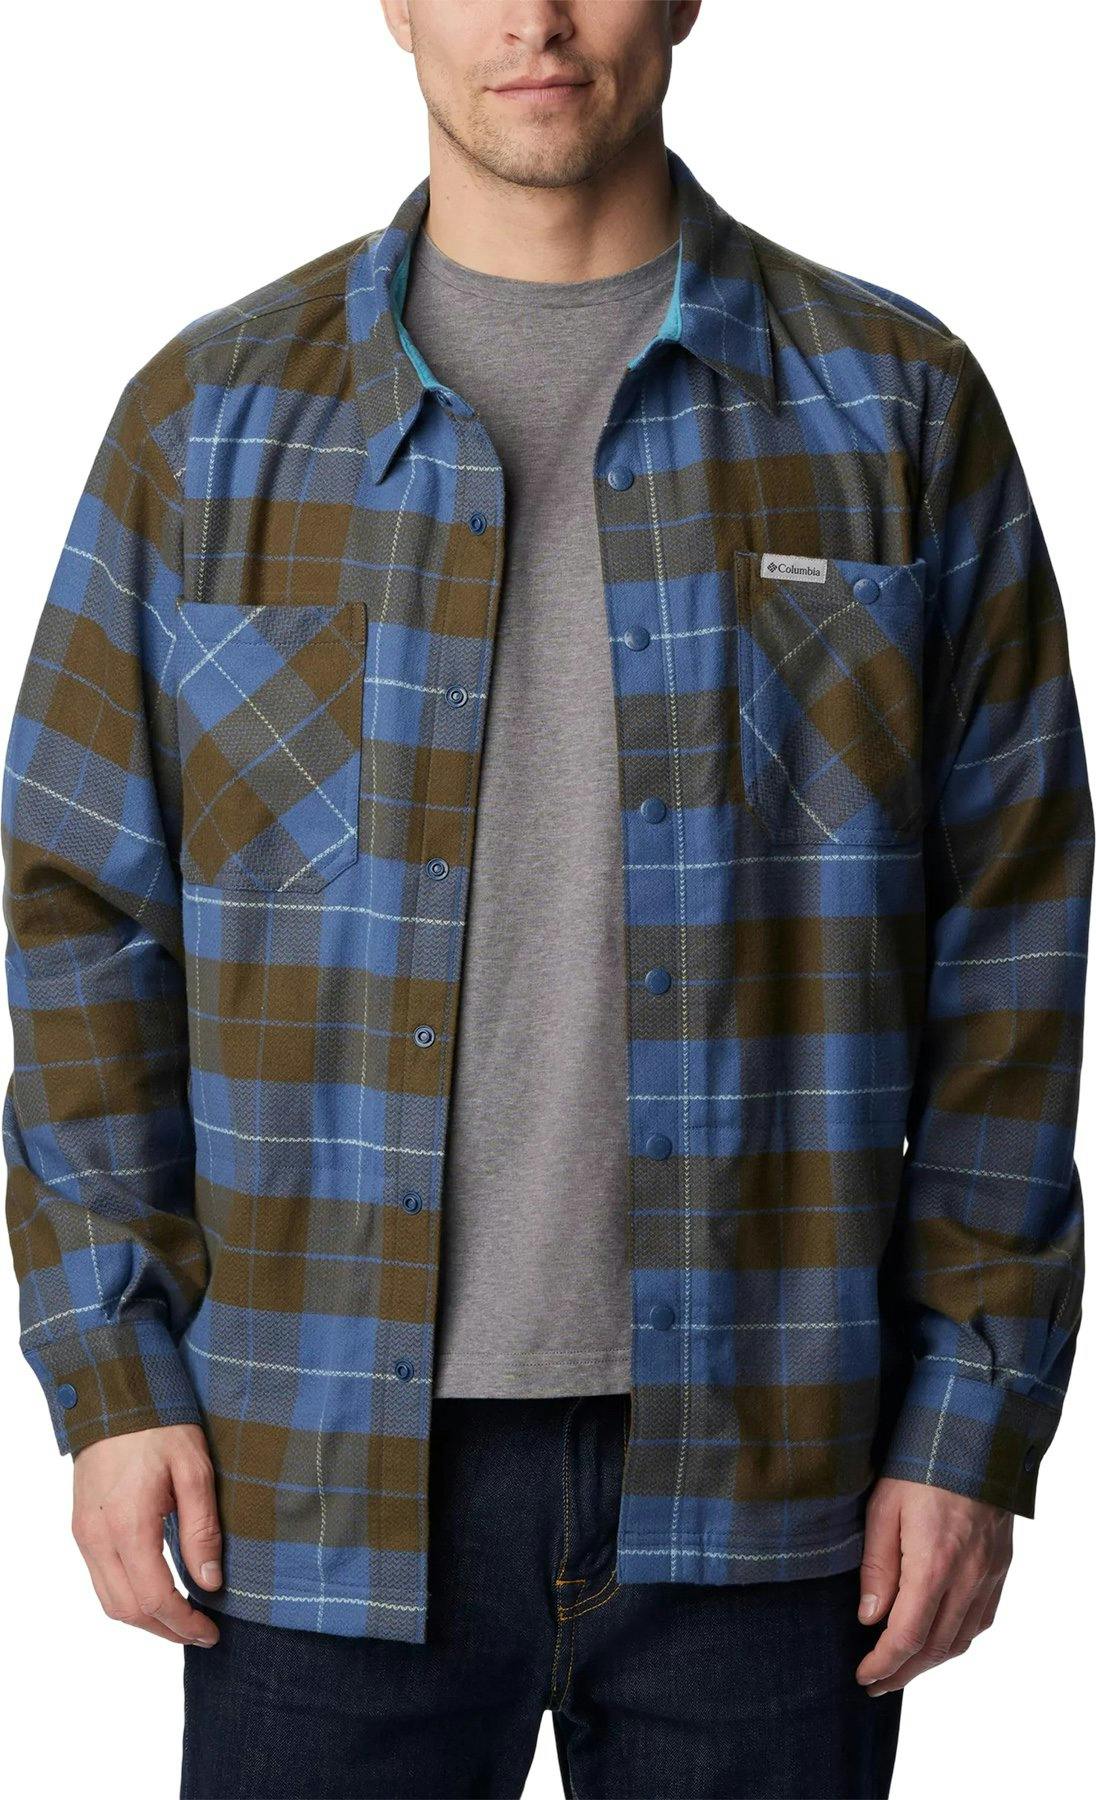 Product image for Cornell Woods Fleece Lined Shirt Jacket - Men's